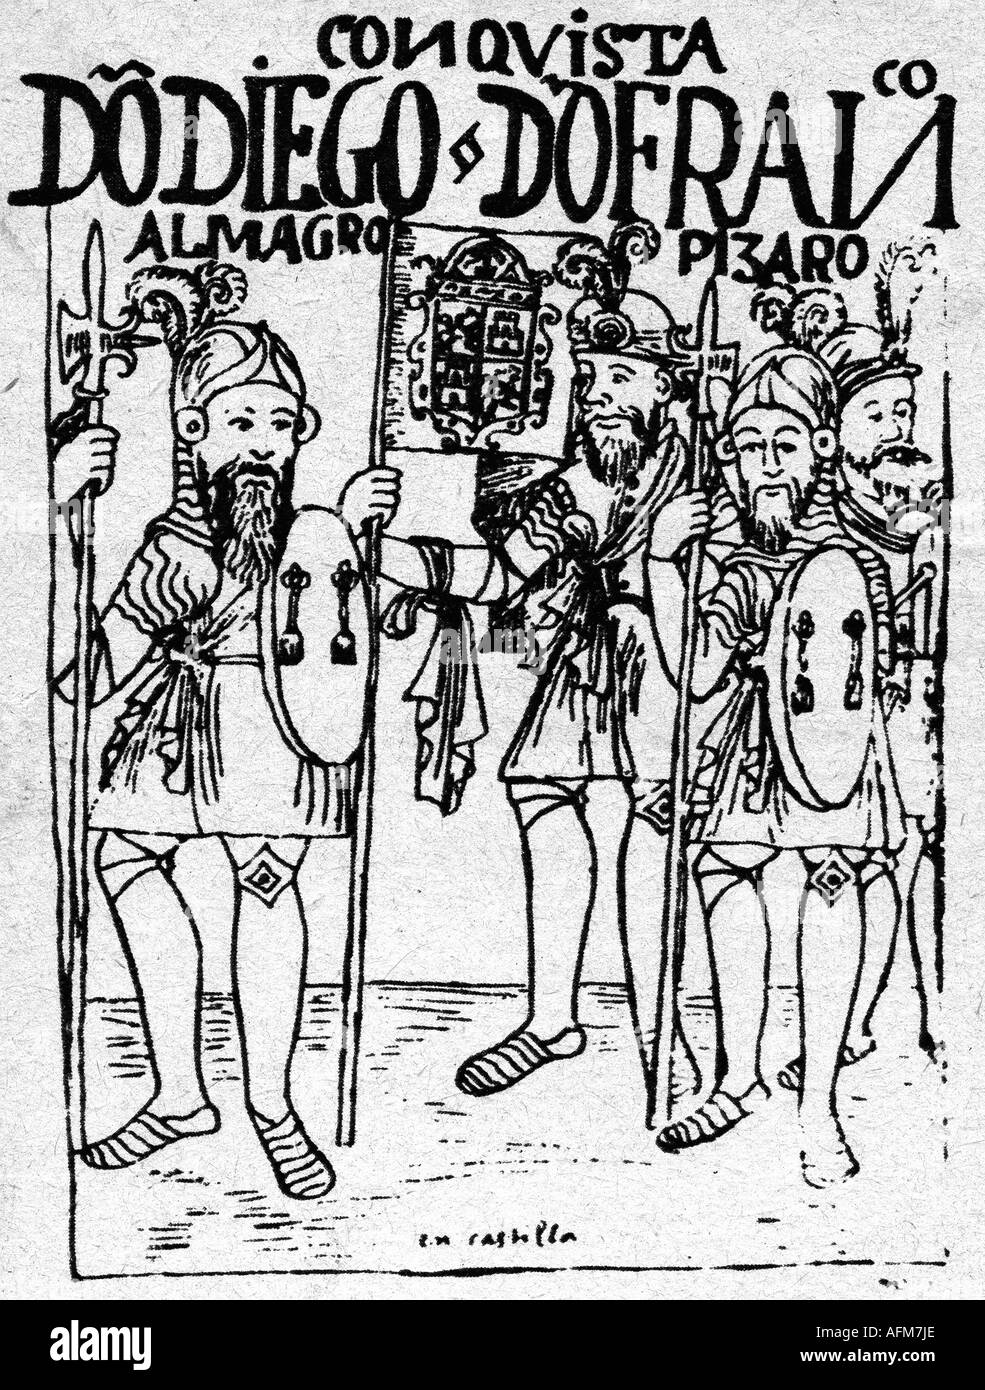 Pizarro, Francisco, circa 1475 - 26.6.1541, Spanish conquistador, with Dieho Almagro, engraving from 'Nueva coronica y buen gobierno' by Felipe Guaman Poma de Ayala, circa 1613, Stock Photo